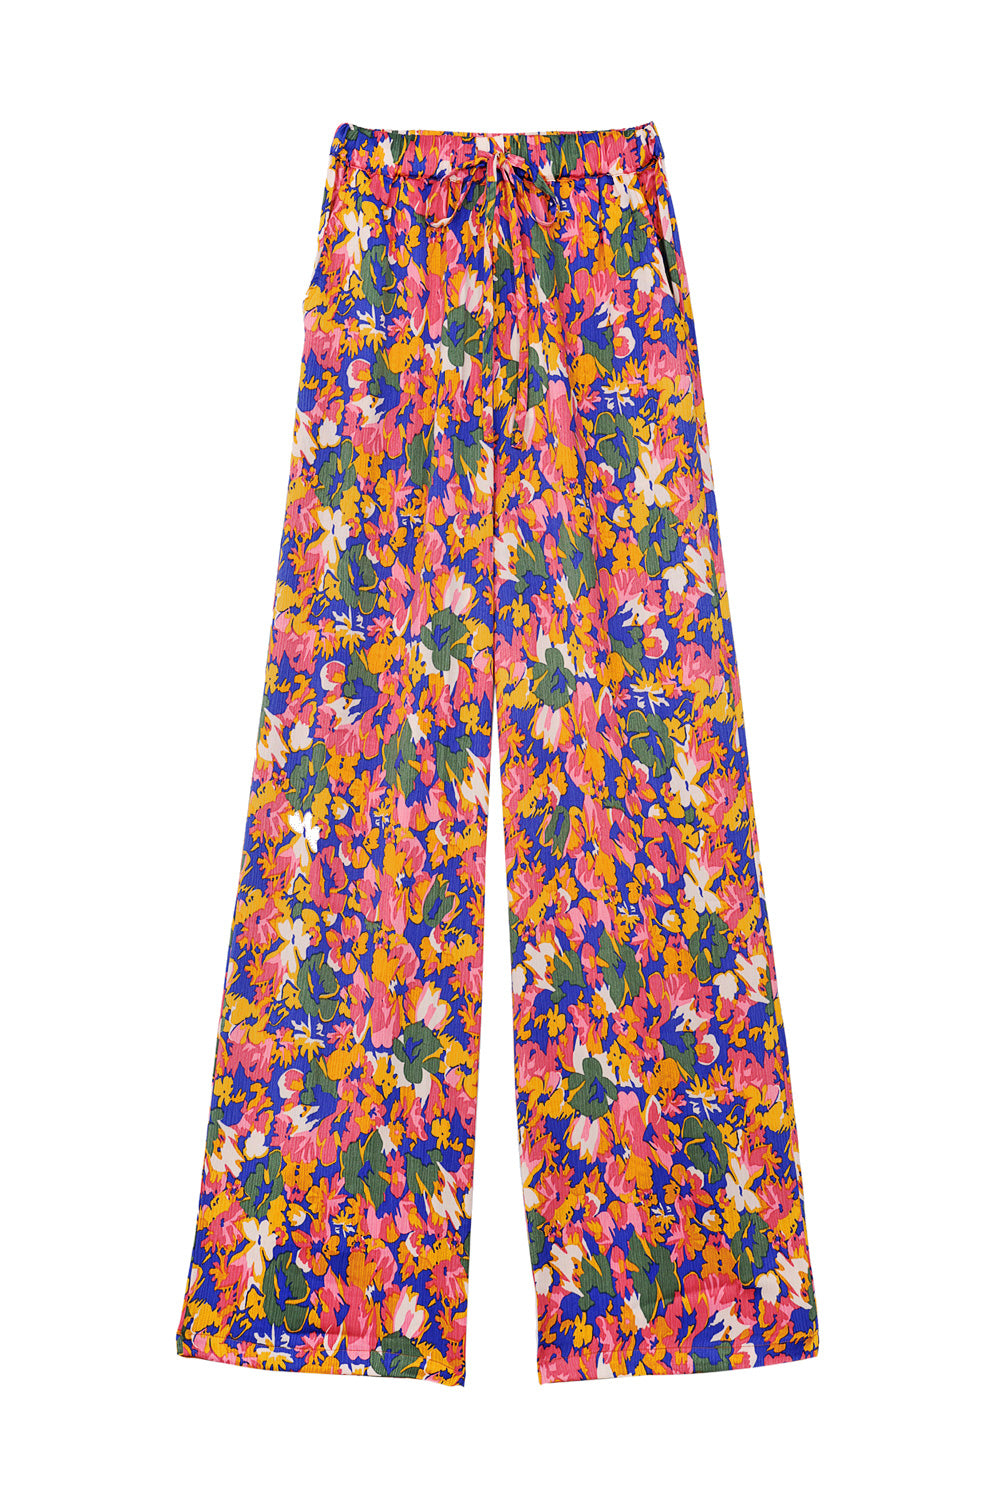 Pantalon Priam - Floral